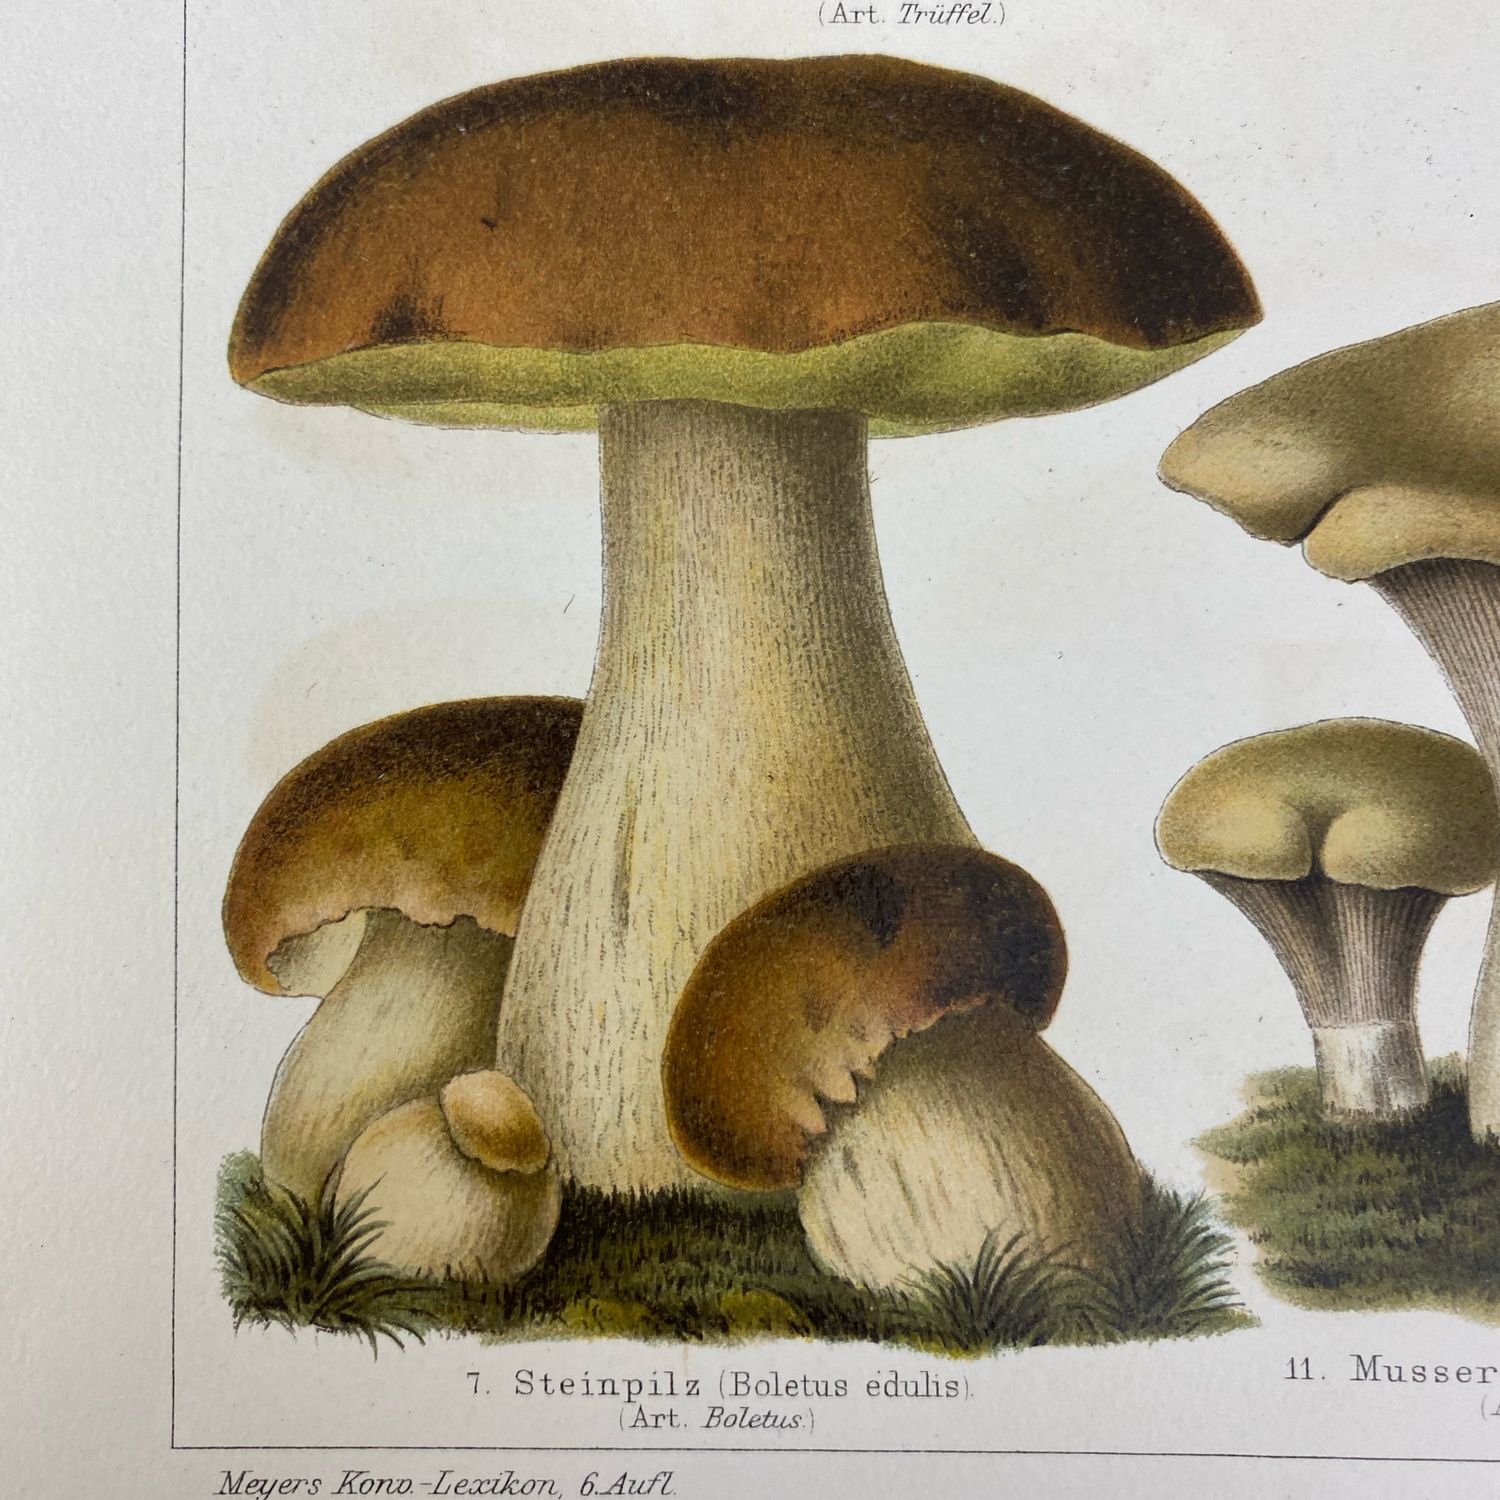 Германия грибы